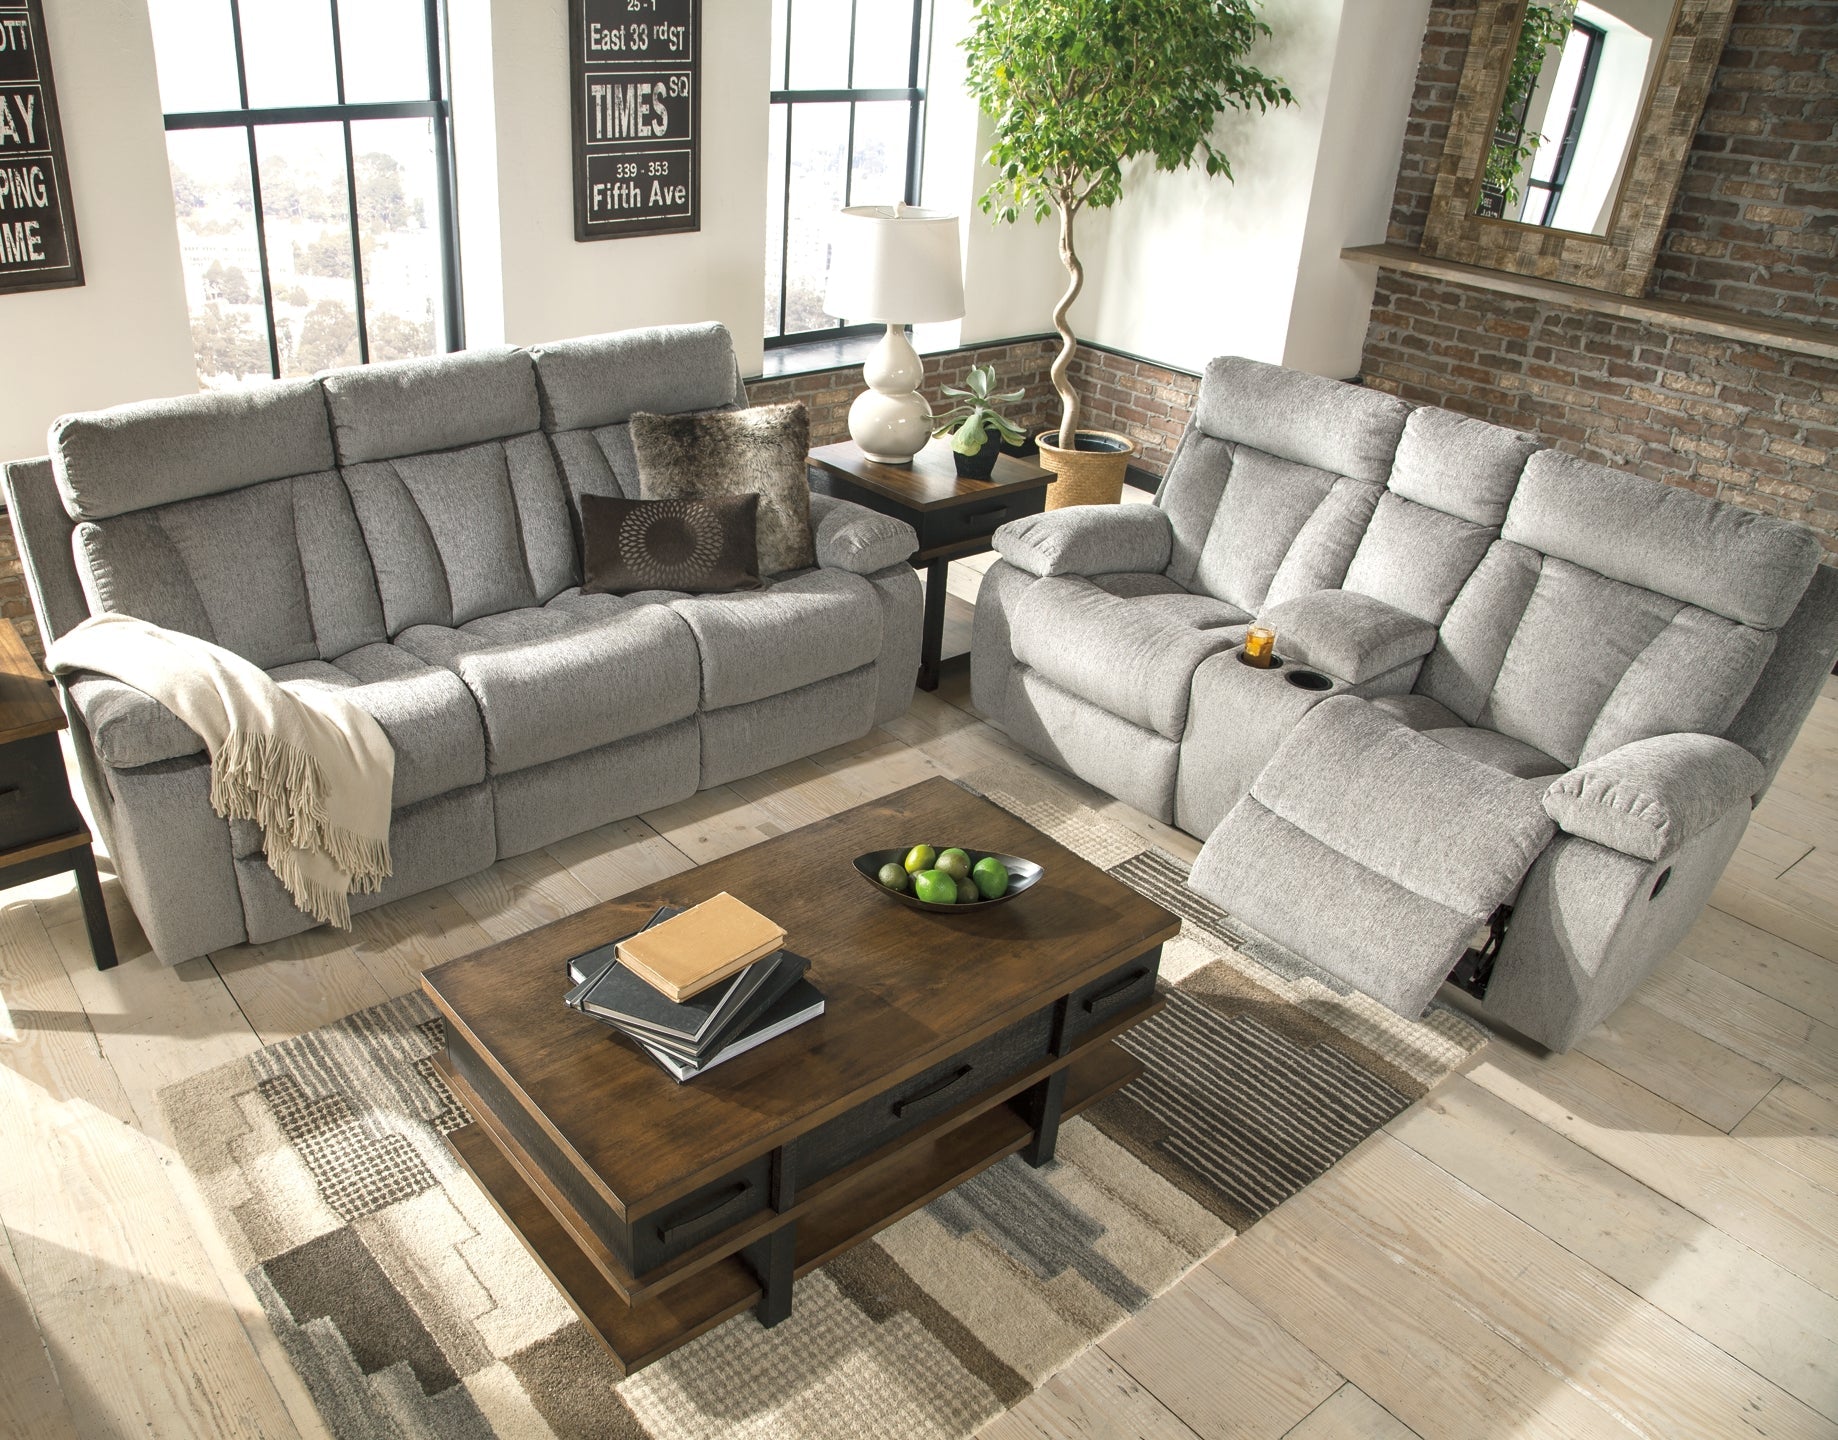 Mitchiner DBL Rec Loveseat w/Console at Cloud 9 Mattress & Furniture furniture, home furnishing, home decor